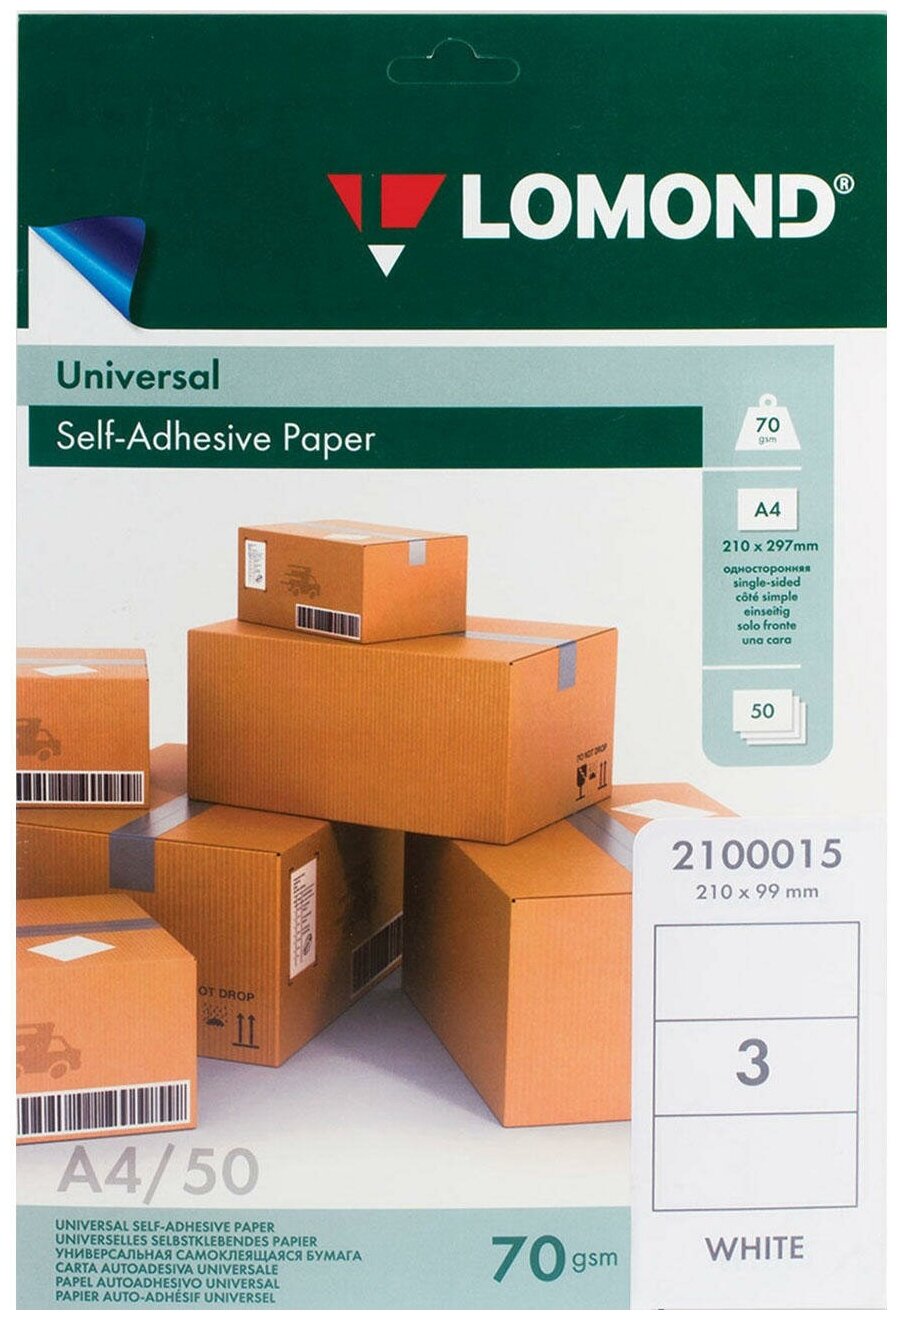 Lomond 2100015 универсальная матовая самоклеящаяся деленая бумага 3 части (210х99мм) A4 70 g/m 50 л.